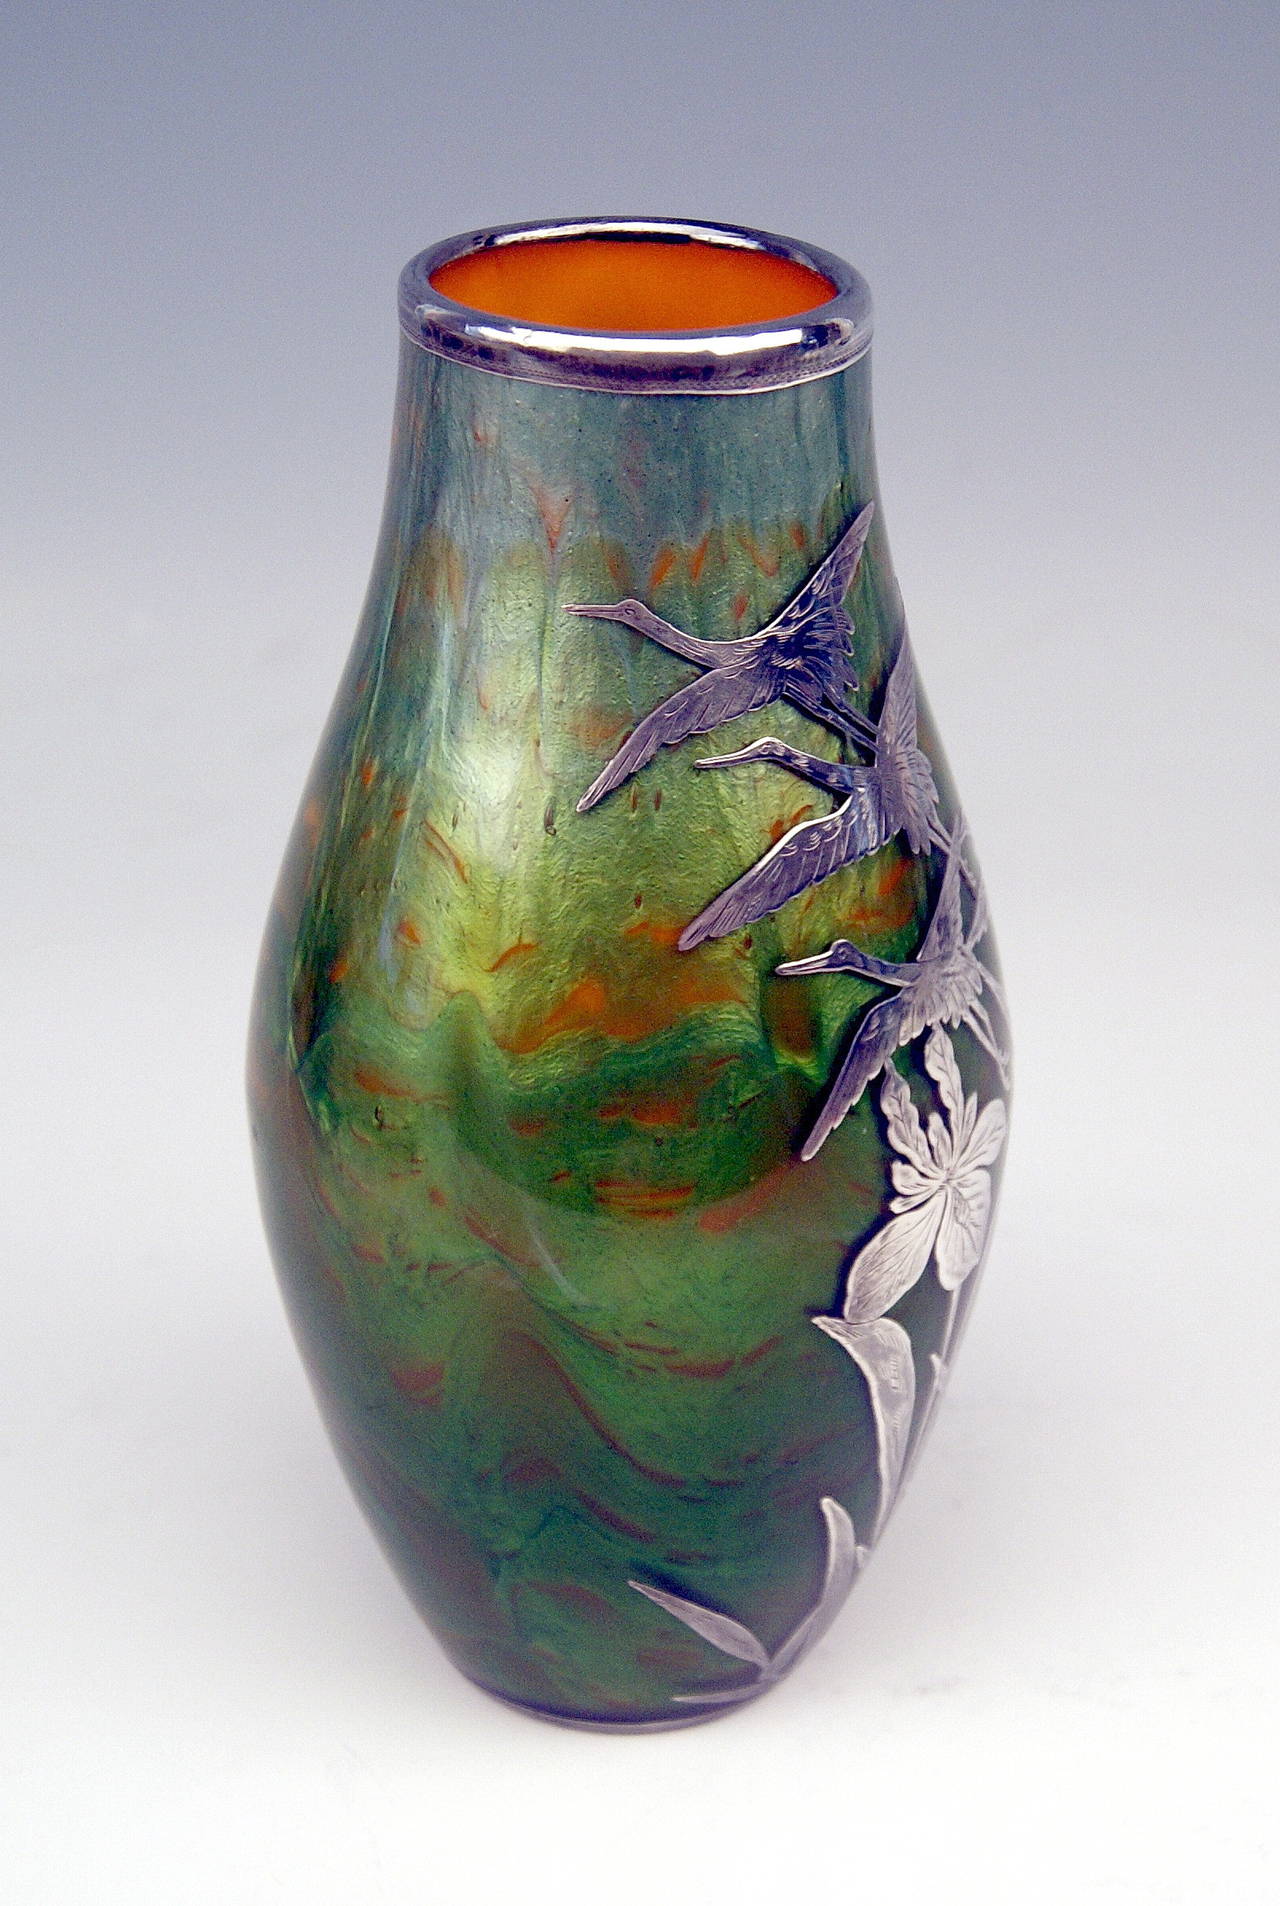 loetz silver overlay vase